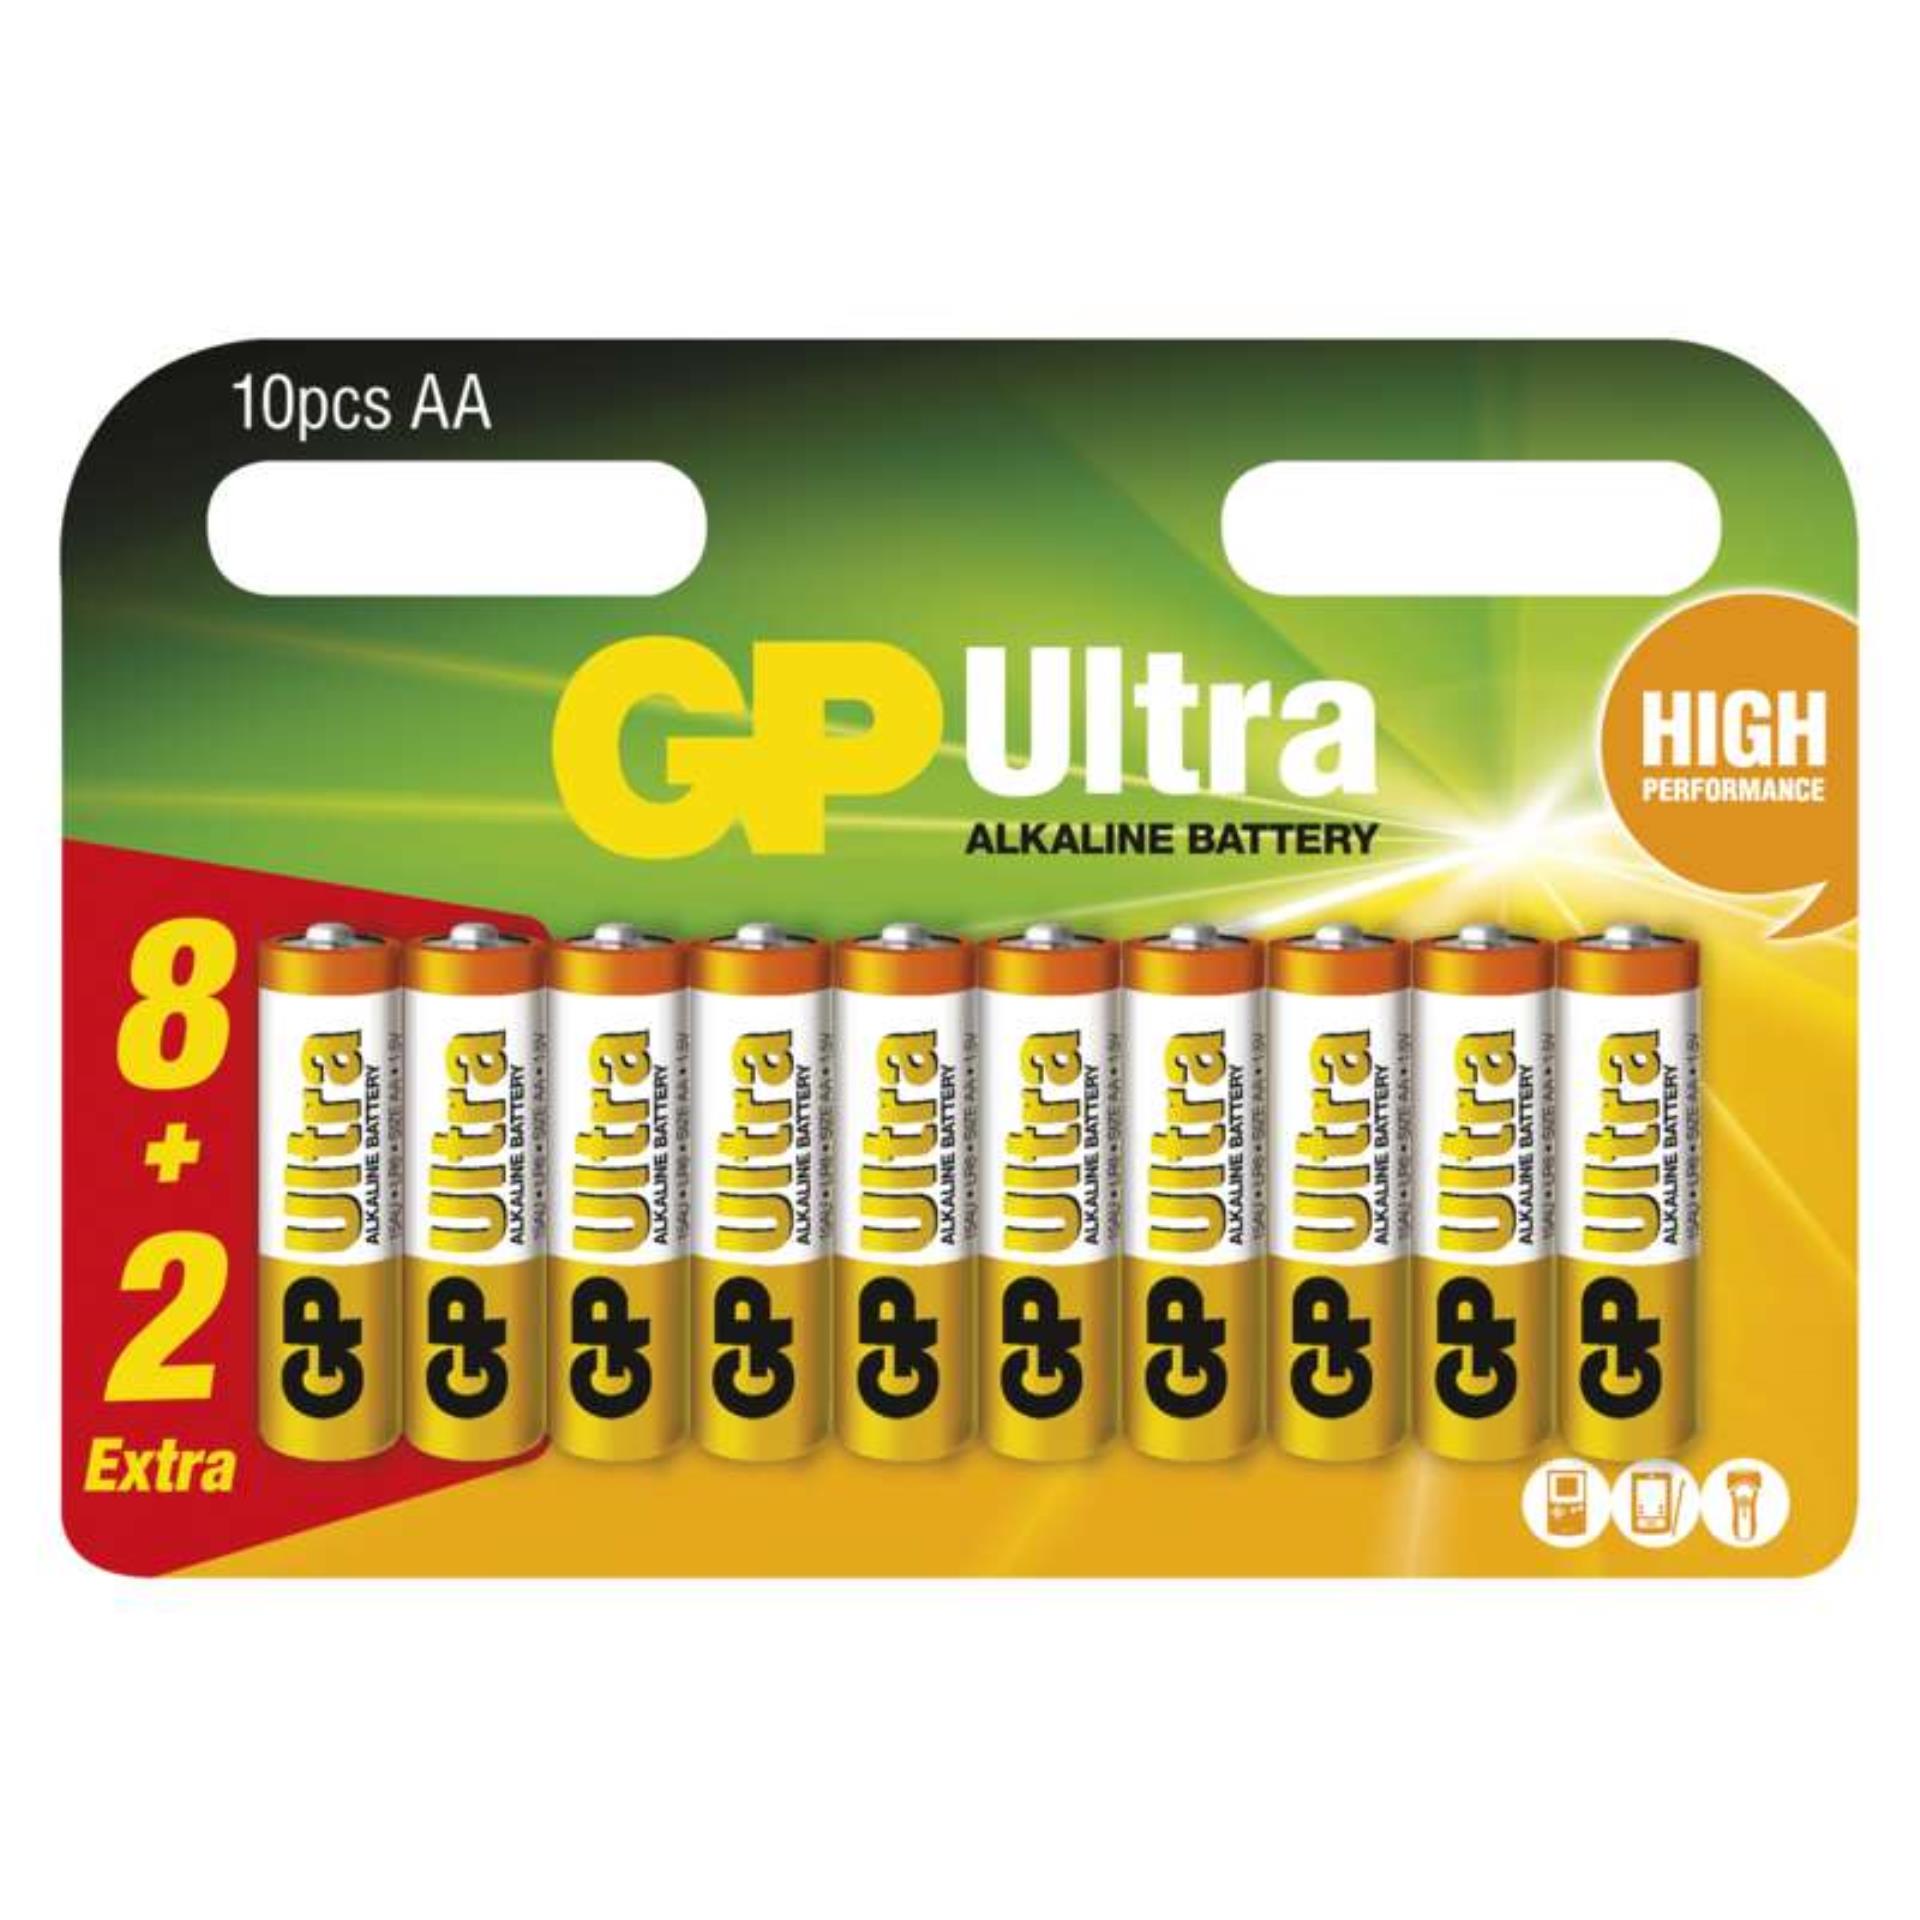 Baterie GP Ultra Alkaline LR6, typ AA, 1,5V, 8+2 ks